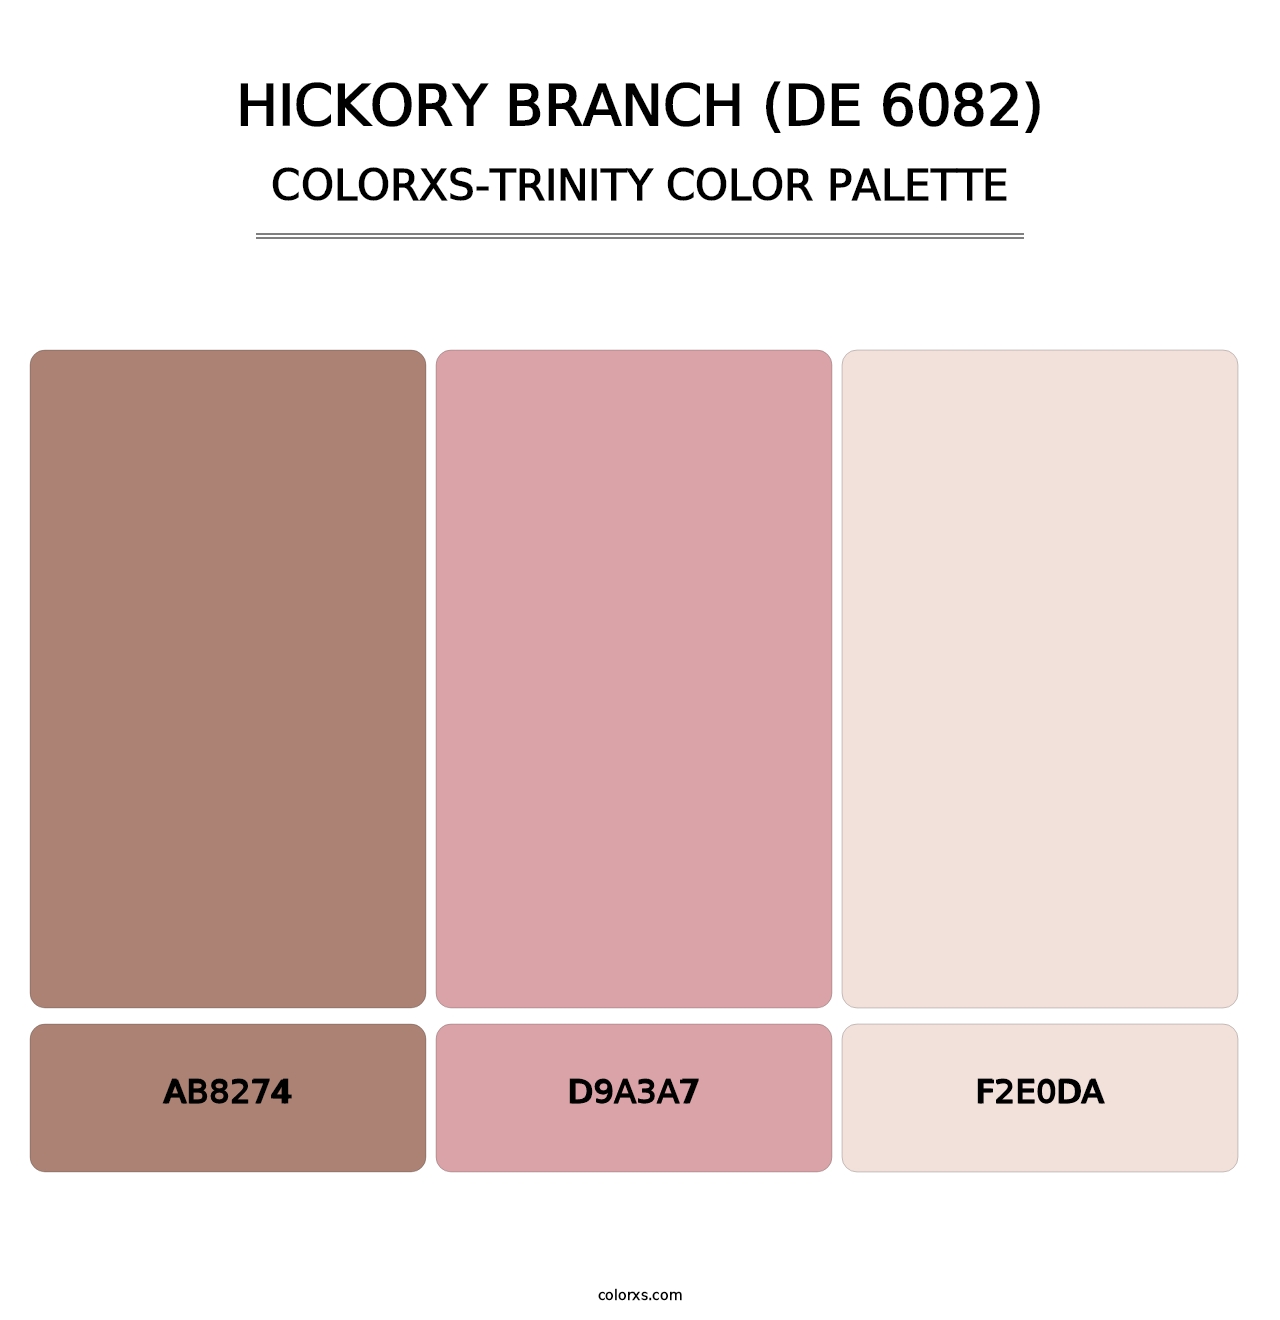 Hickory Branch (DE 6082) - Colorxs Trinity Palette